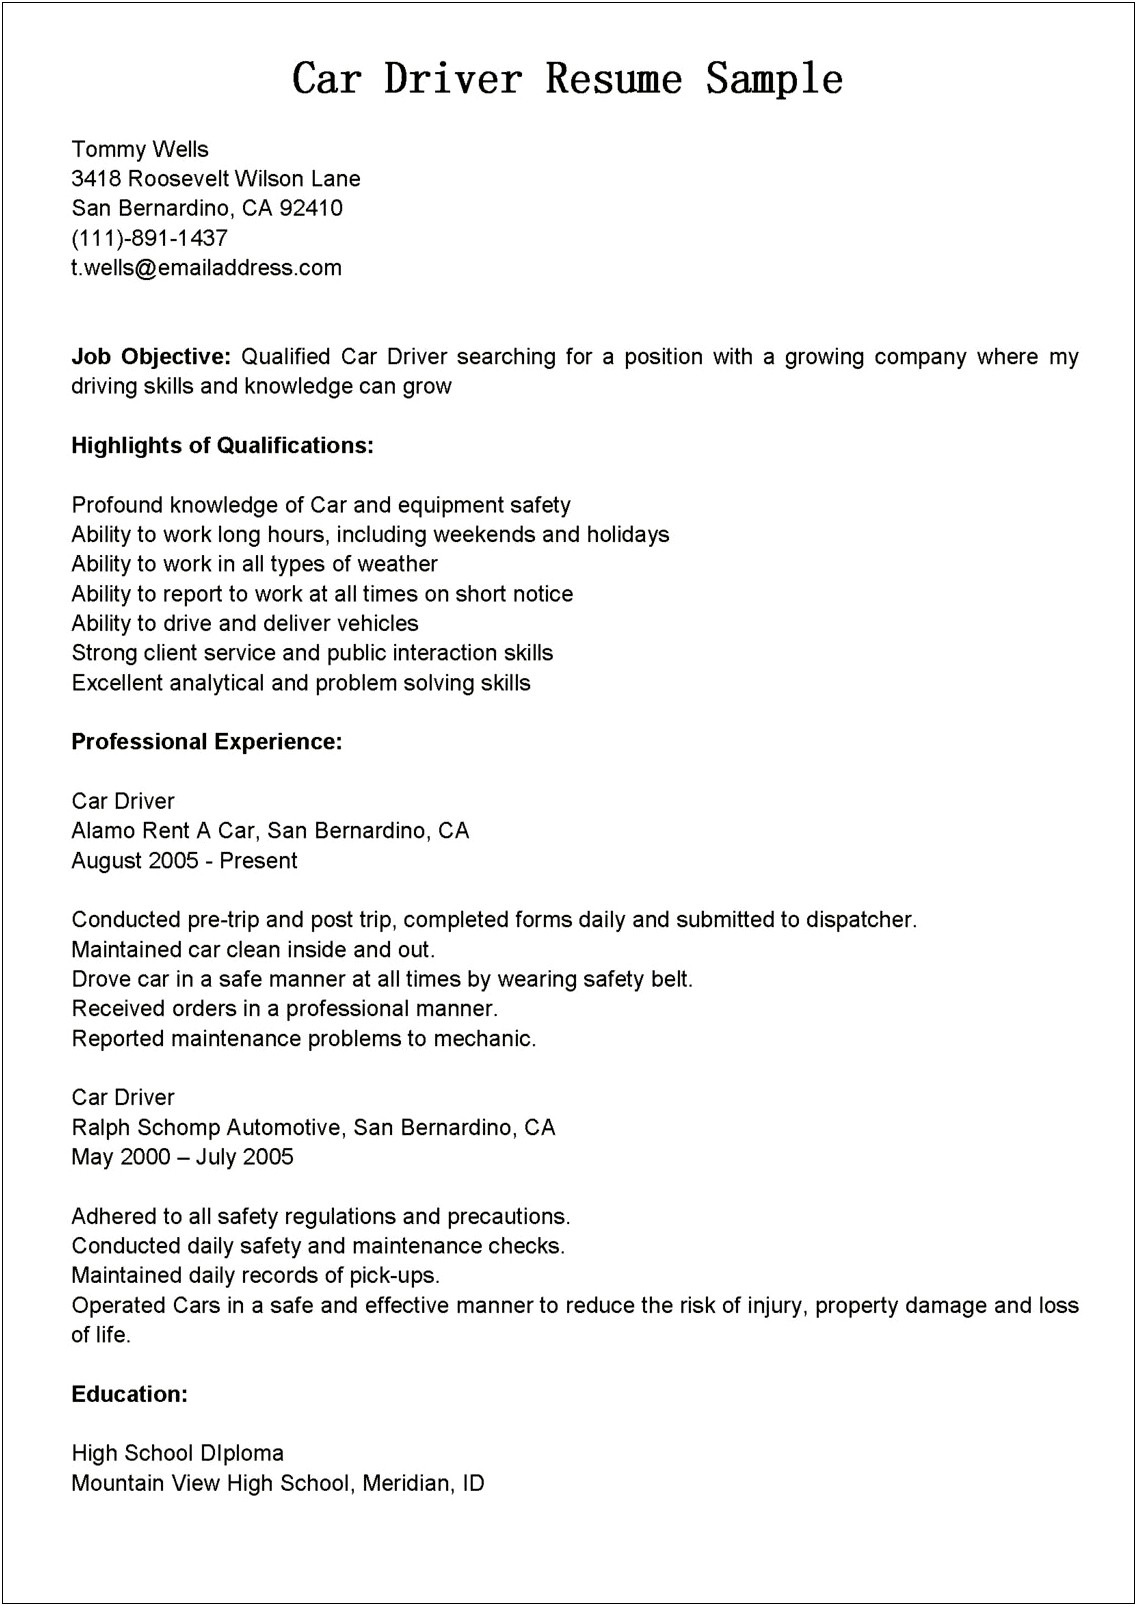 Driving Job Application Resume Demo